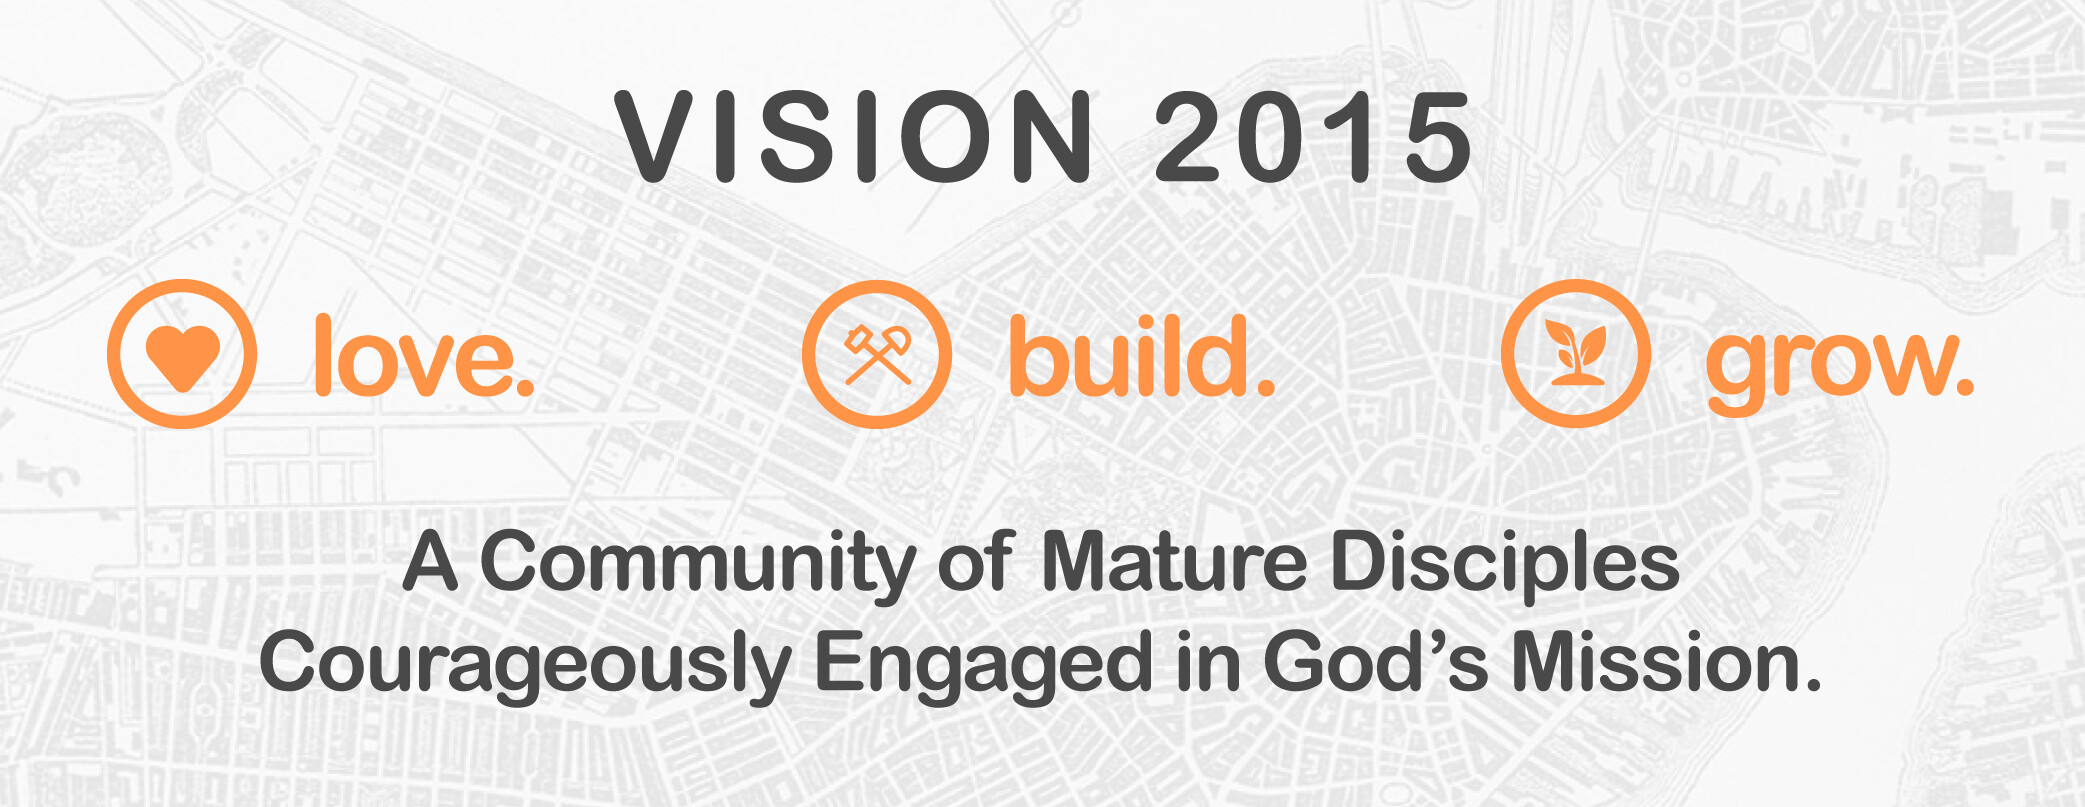 2015 Vision Sermon